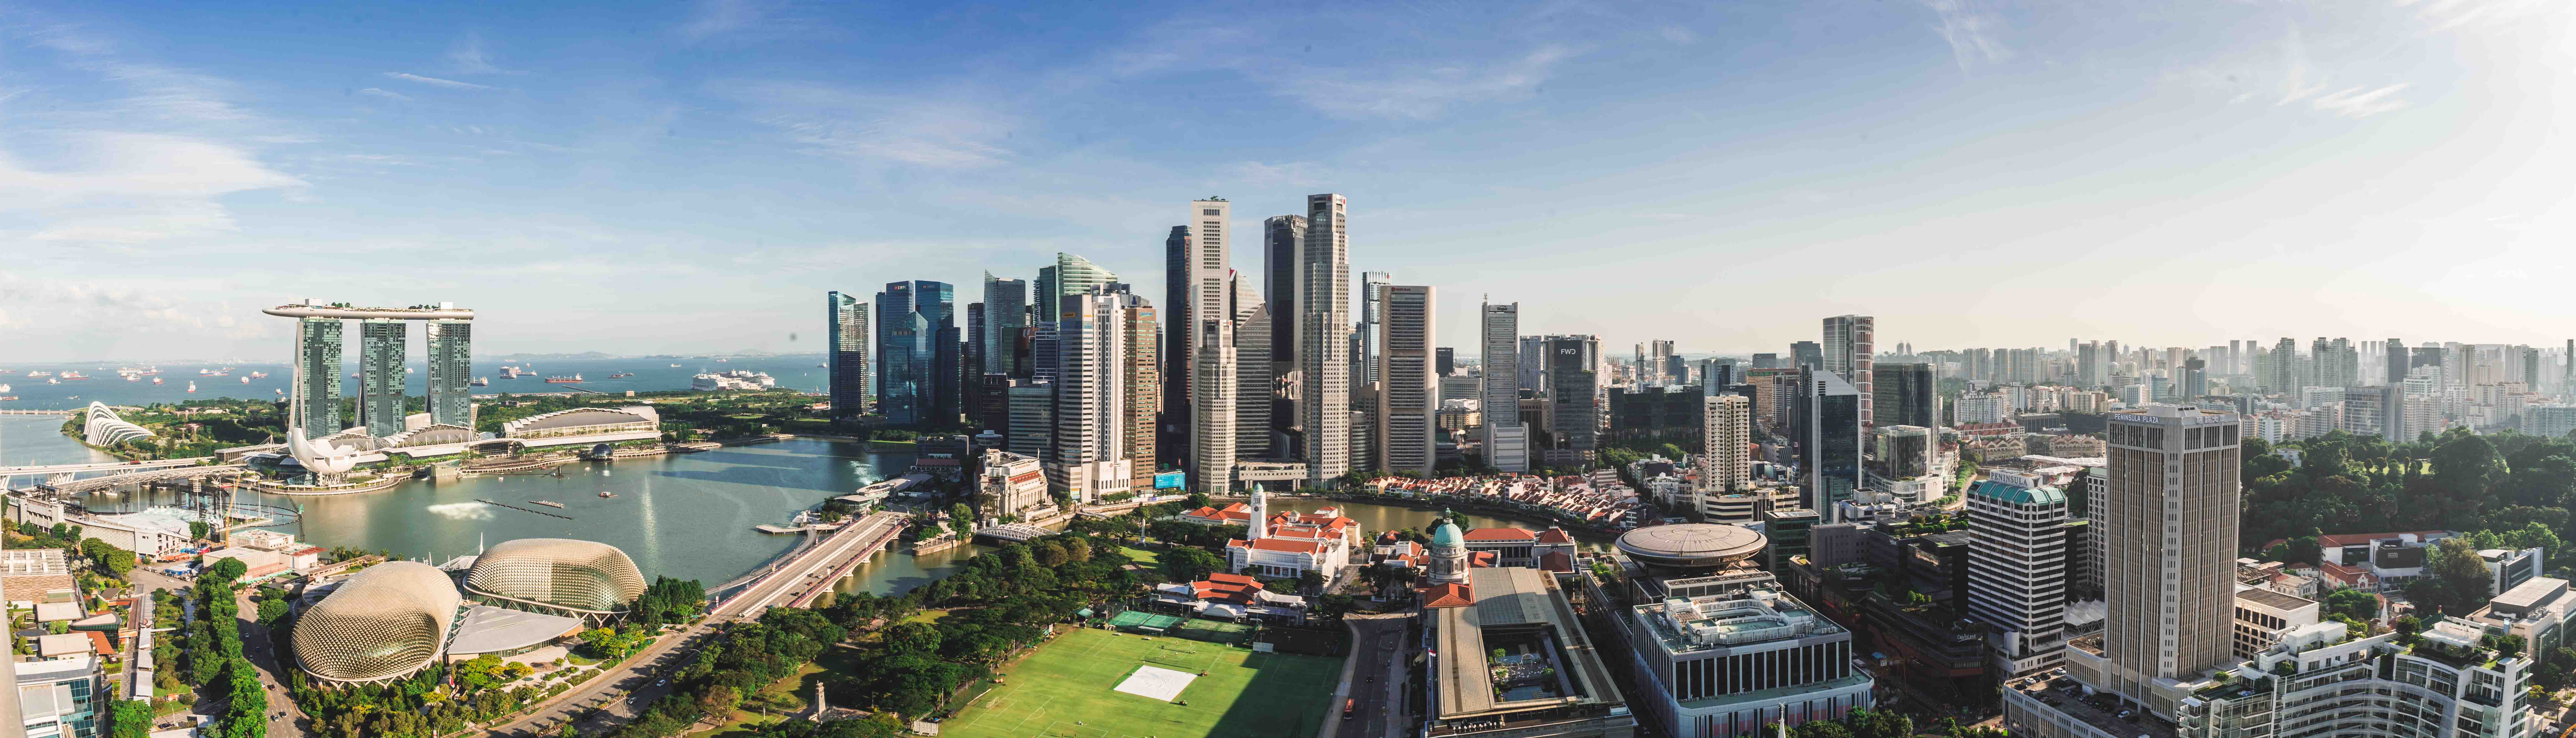 Panorama of Singaporean city centre